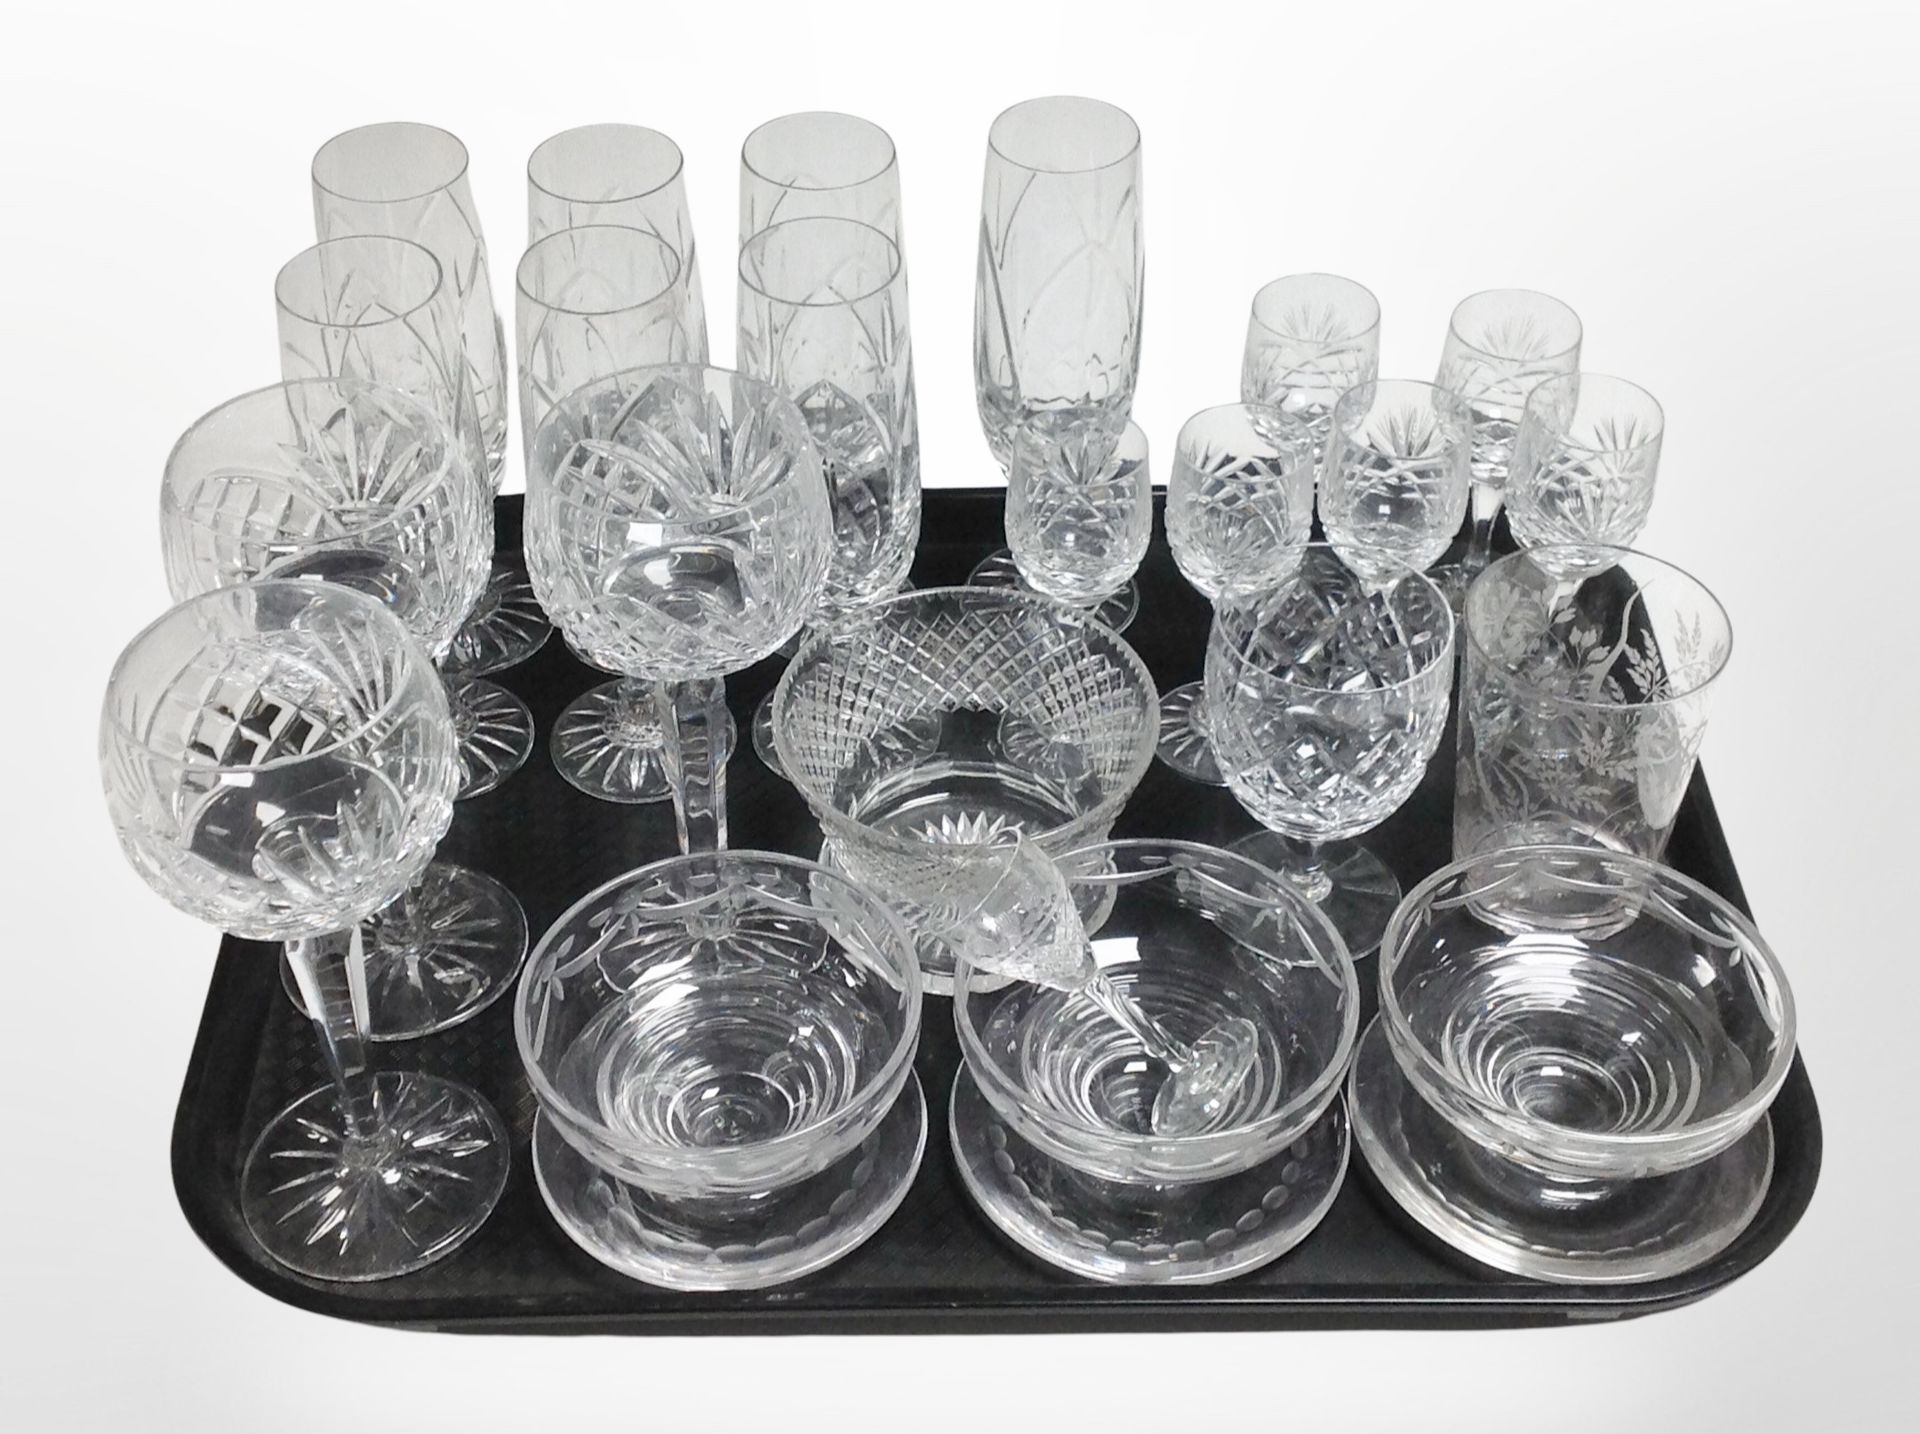 A set of 7 crystal champagne flutes, further drinking glasses, etched grapefruit bowls.